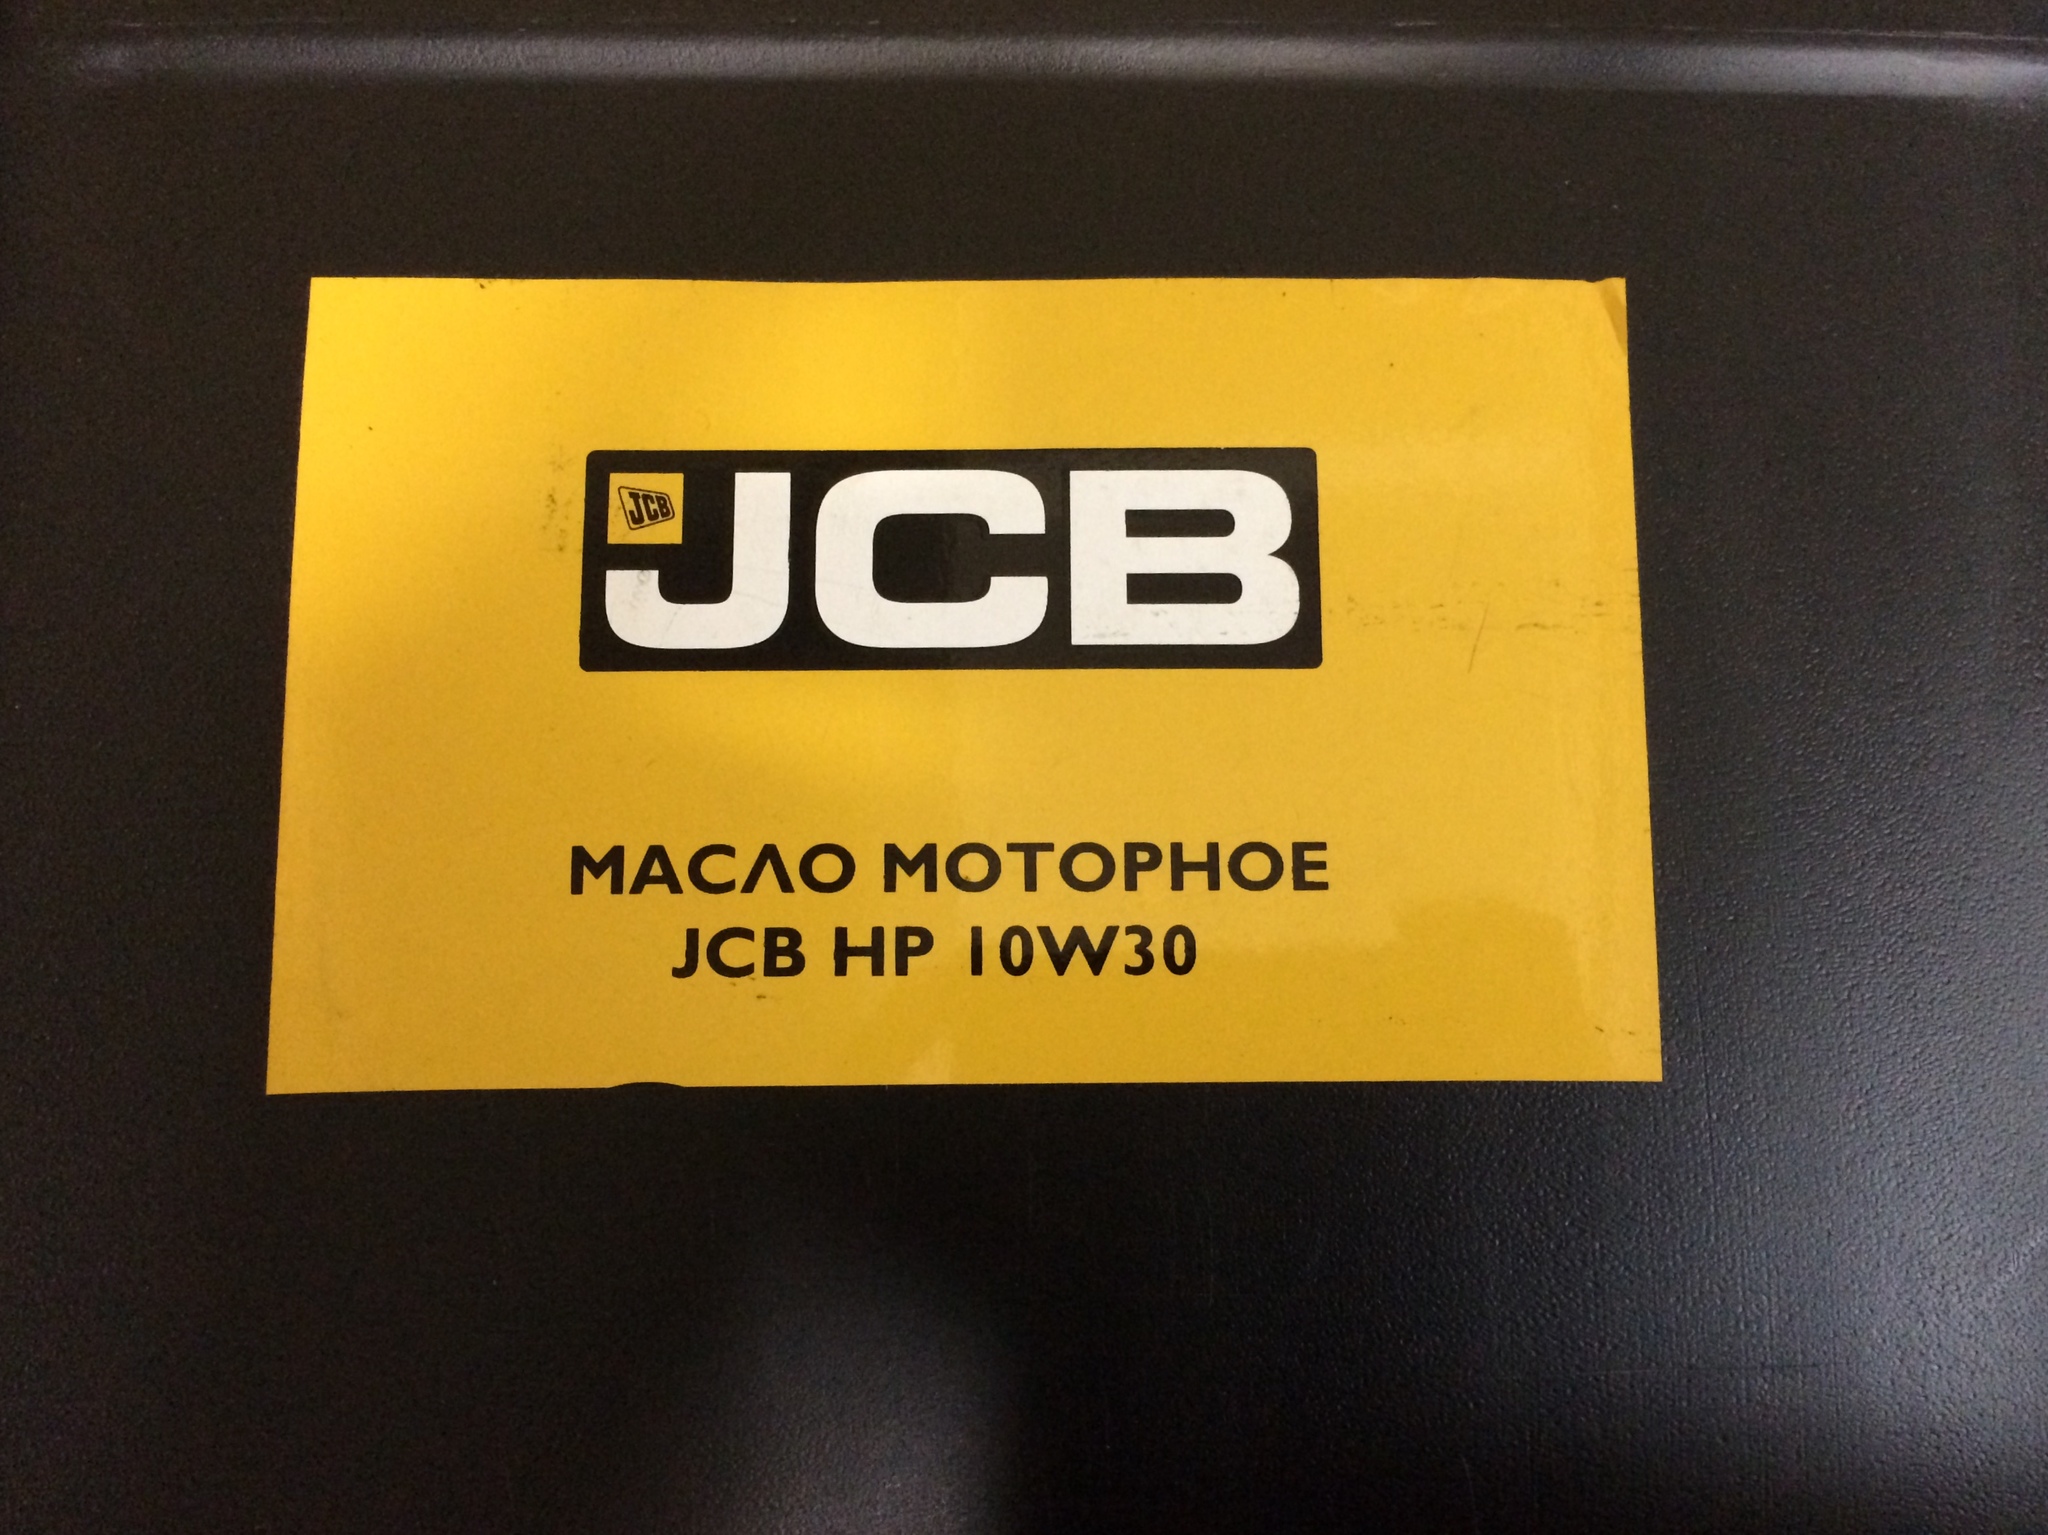 Jcb 4cx масла. Масло JCB 10w30. JCB моторное масло логотип. Гидравлическое масло hp15 JCB. Аналоги масел JCB таблица.